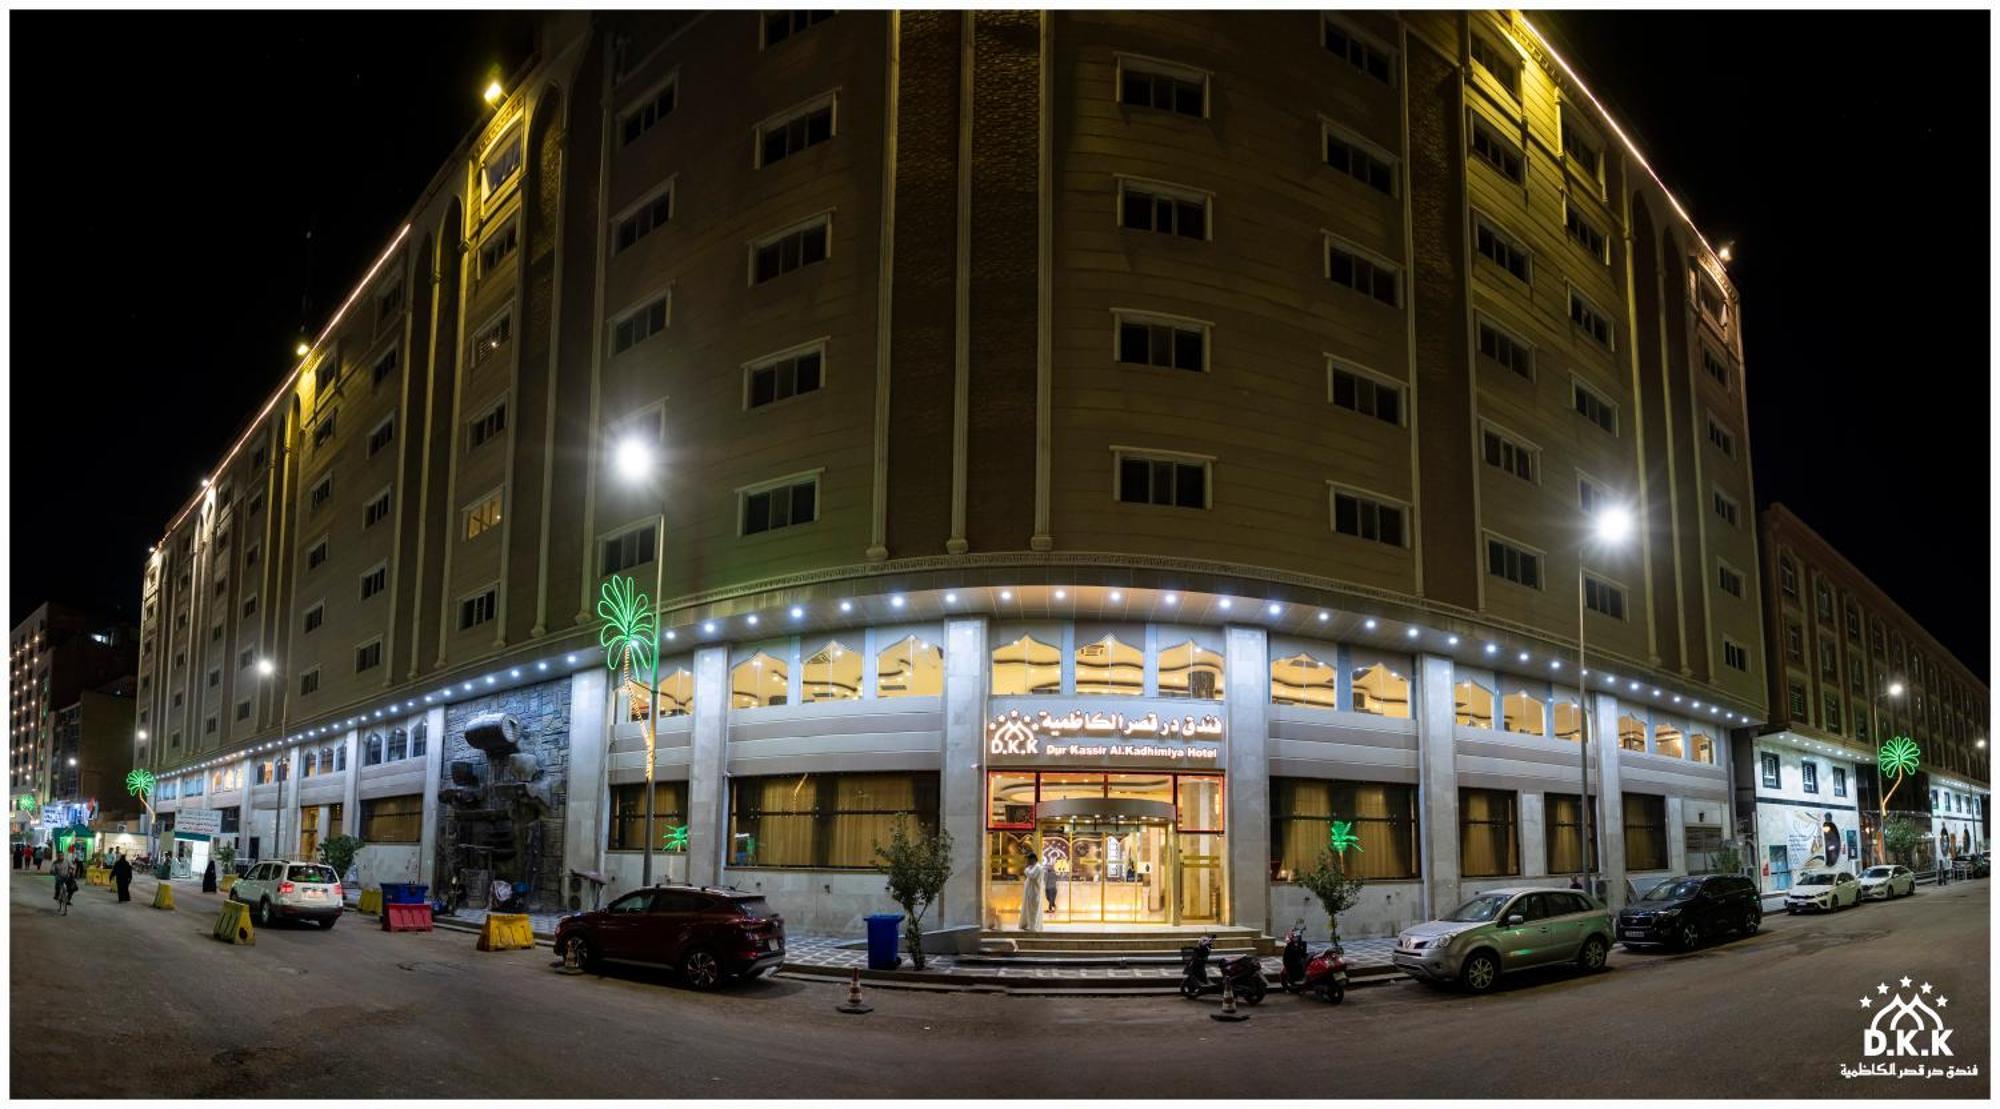 Dur Kassir Alkadhimiya Hotel Karbala Exterior photo